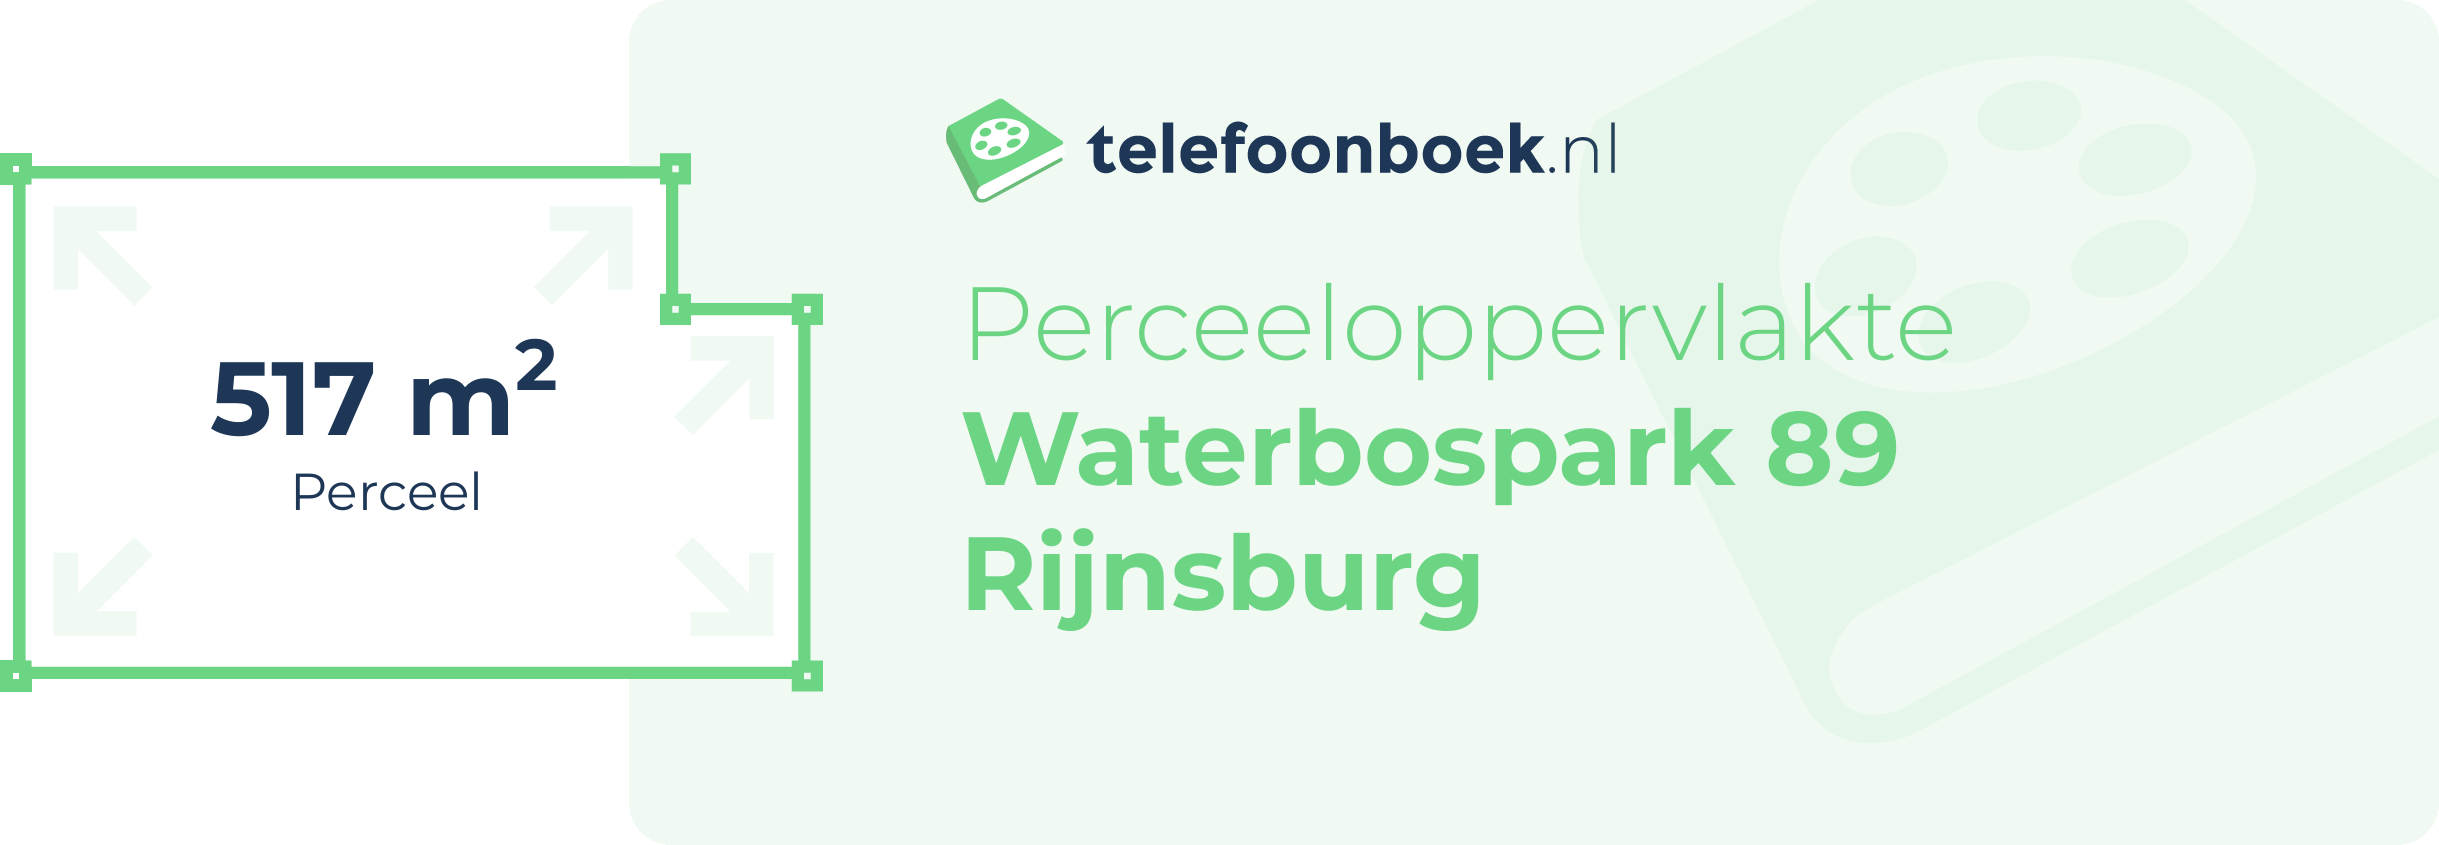 Perceeloppervlakte Waterbospark 89 Rijnsburg